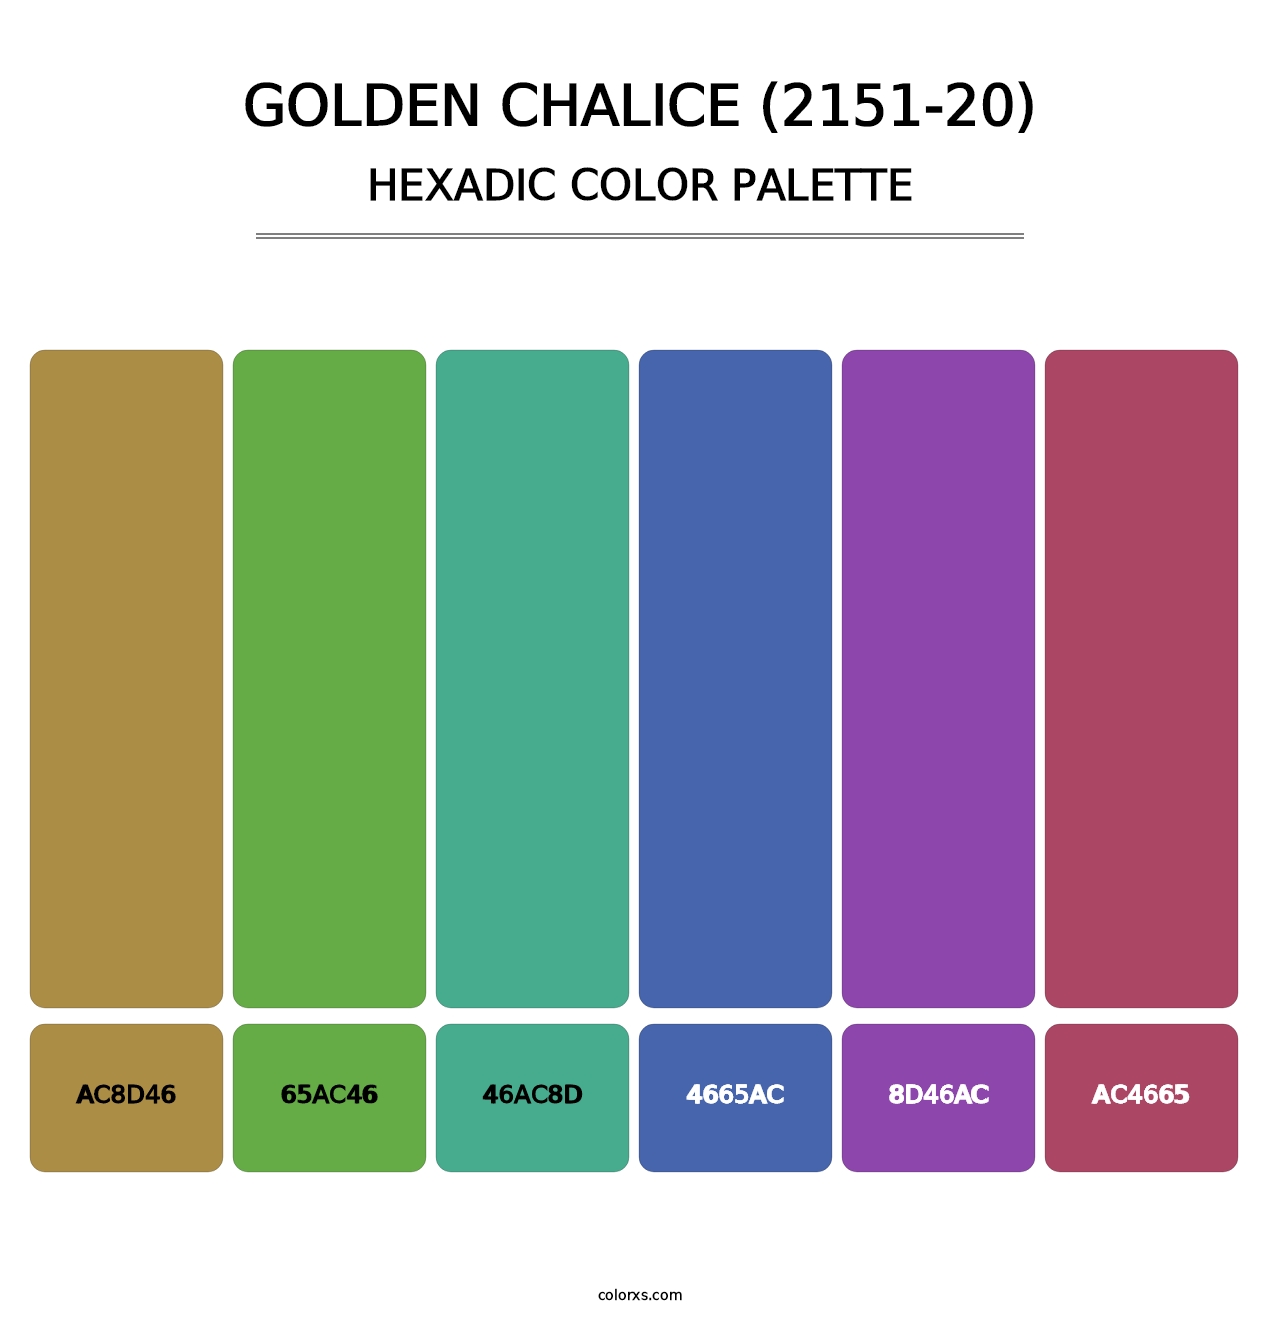 Golden Chalice (2151-20) - Hexadic Color Palette